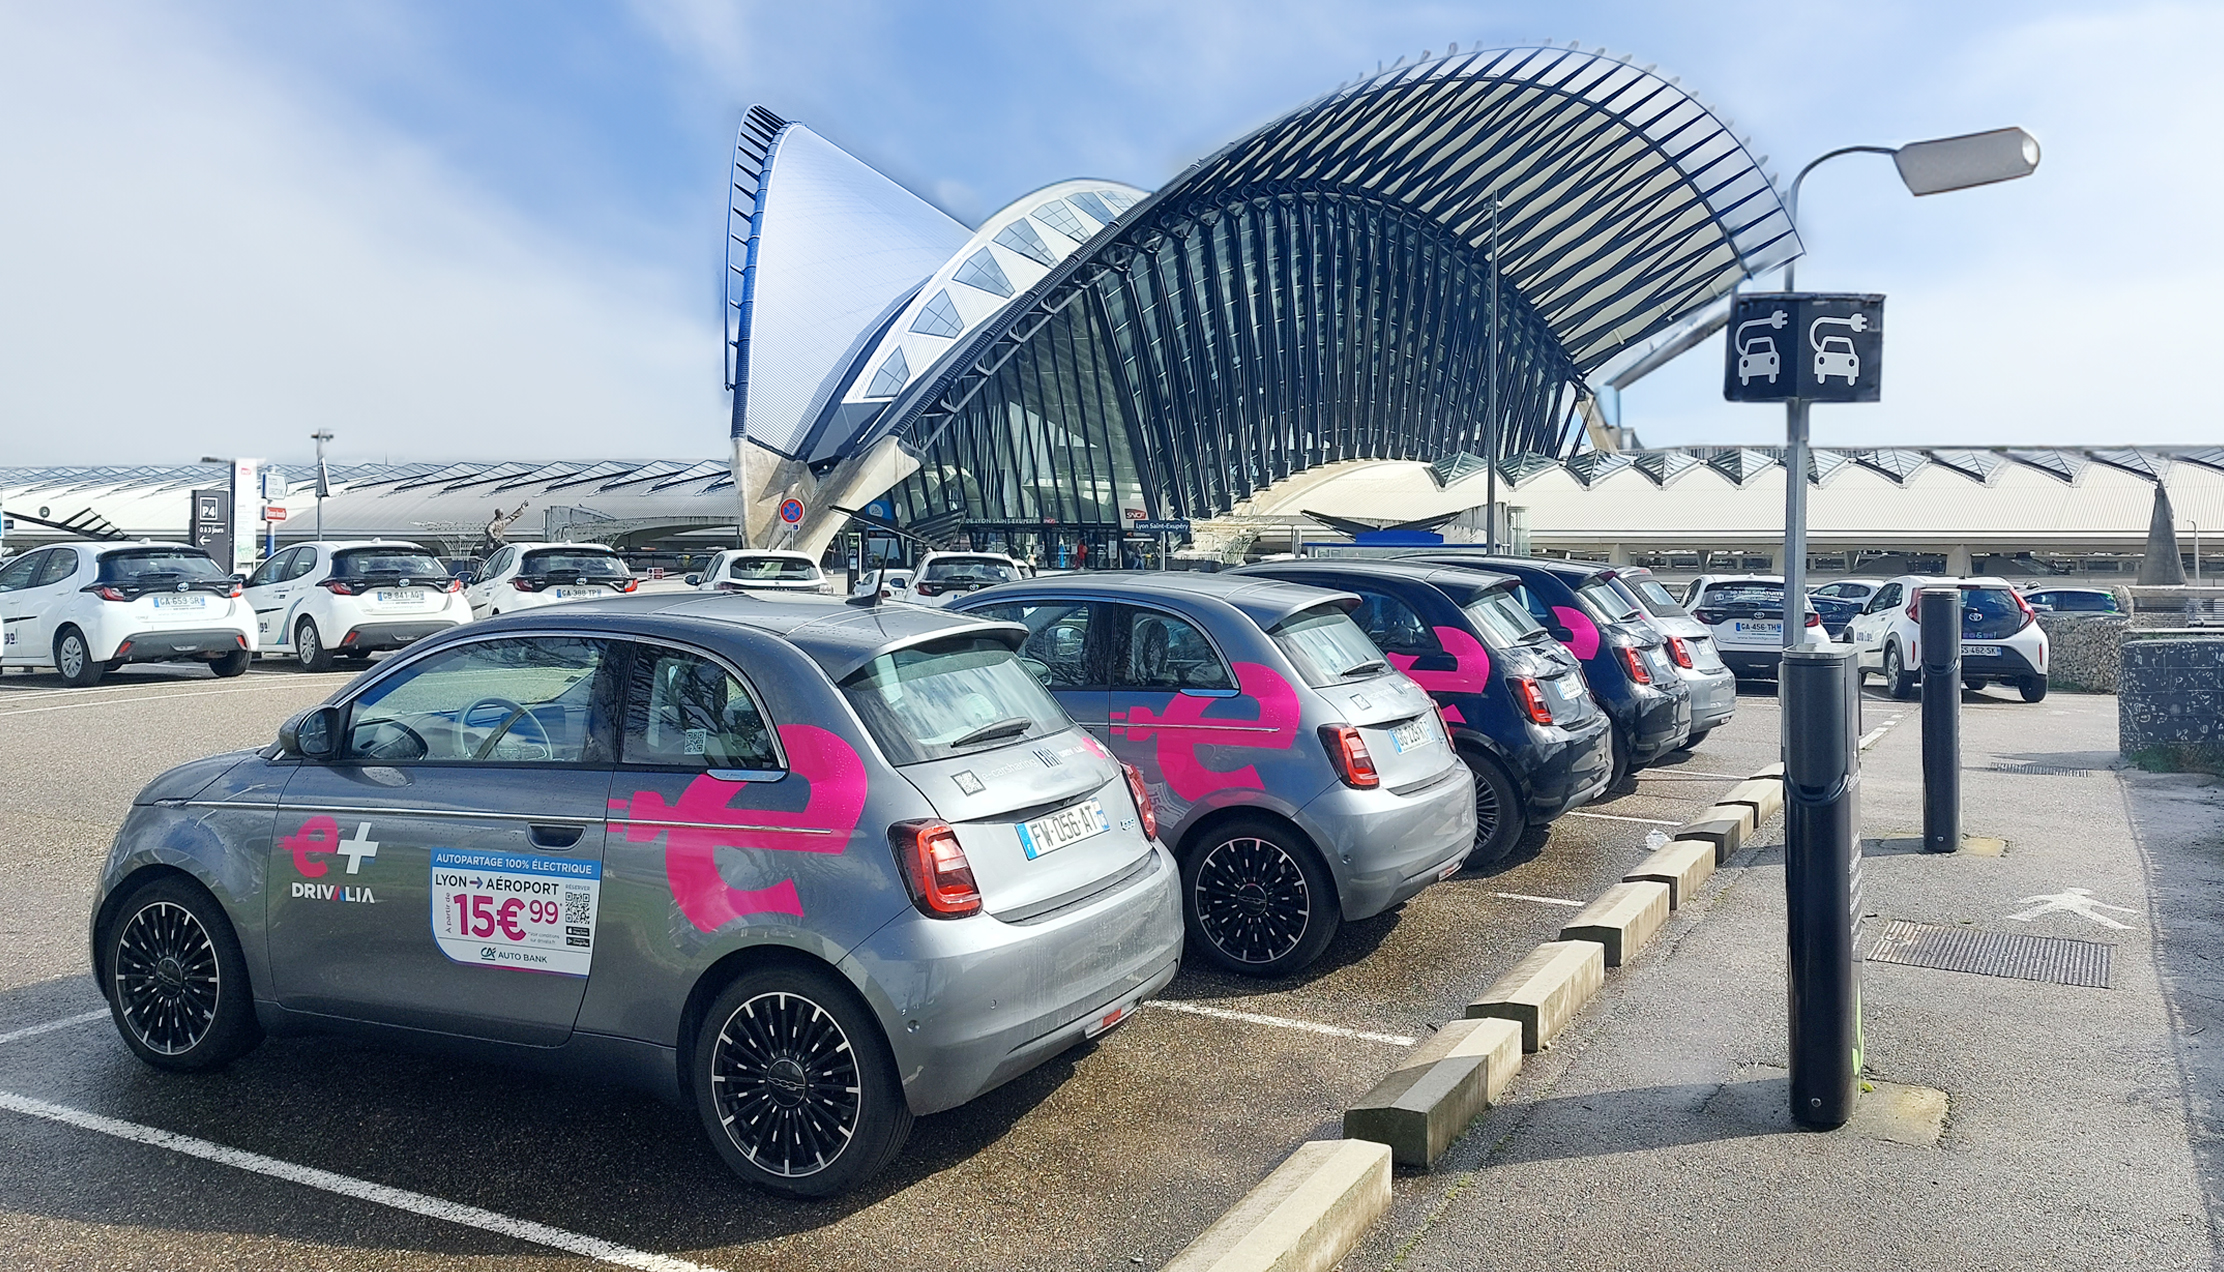 The Drivalia electric car sharing service at Lyon airport